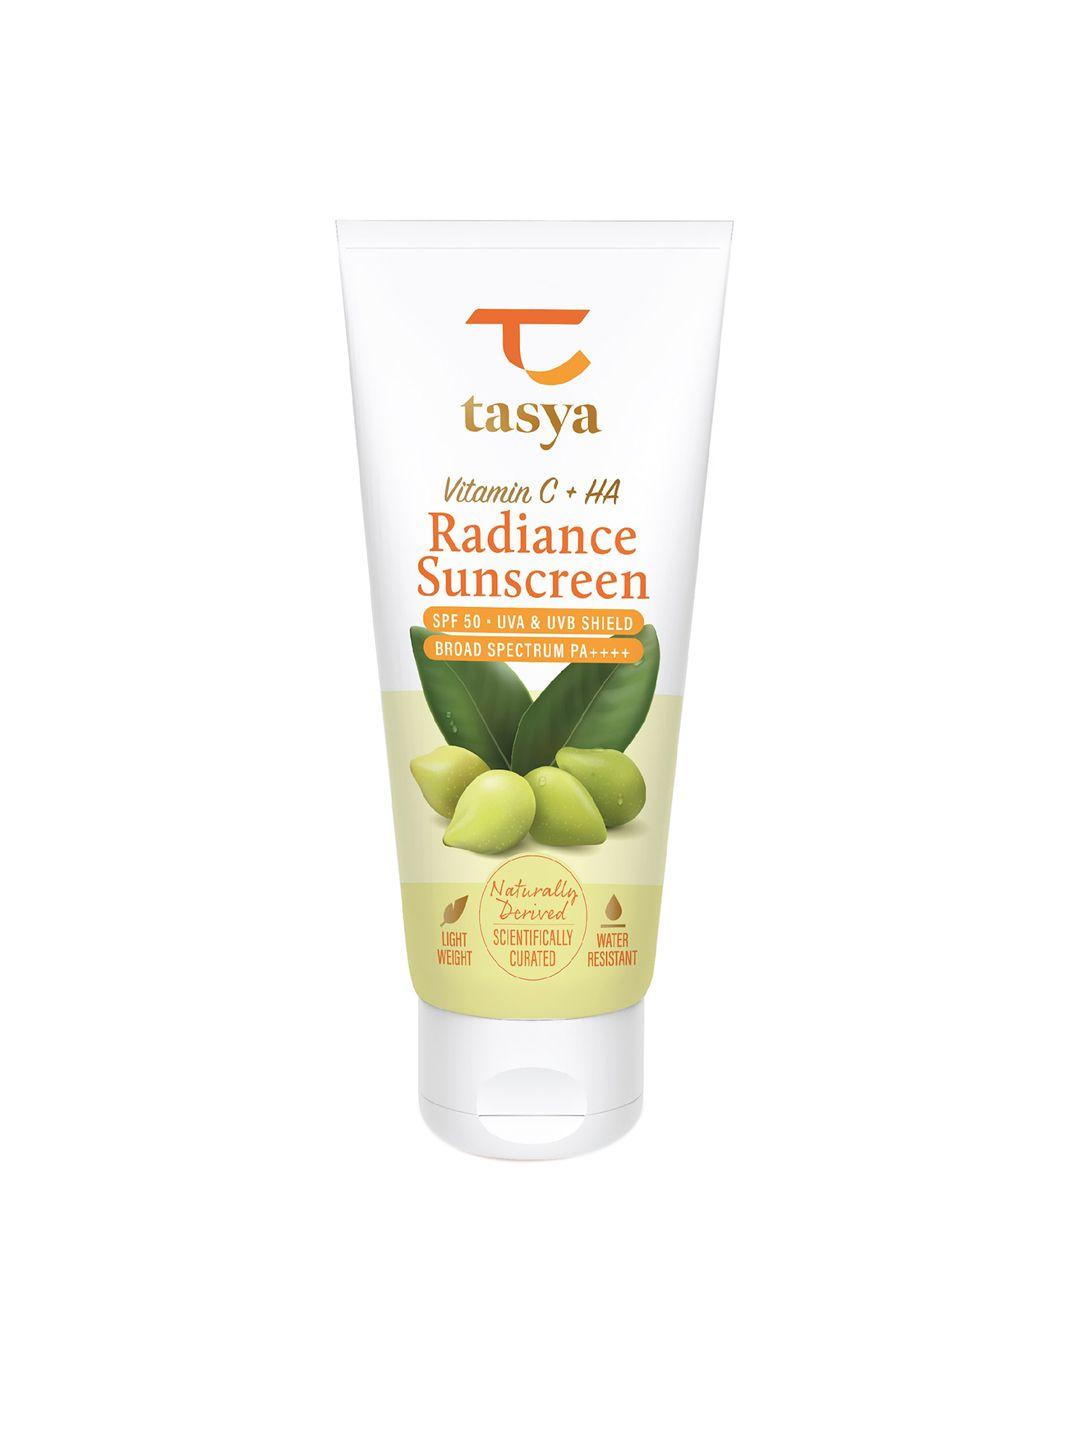 Tasya SPF 50 UVA & UVB Shield Radiance Sunscreen with Vitamin C + HA - 60 ml